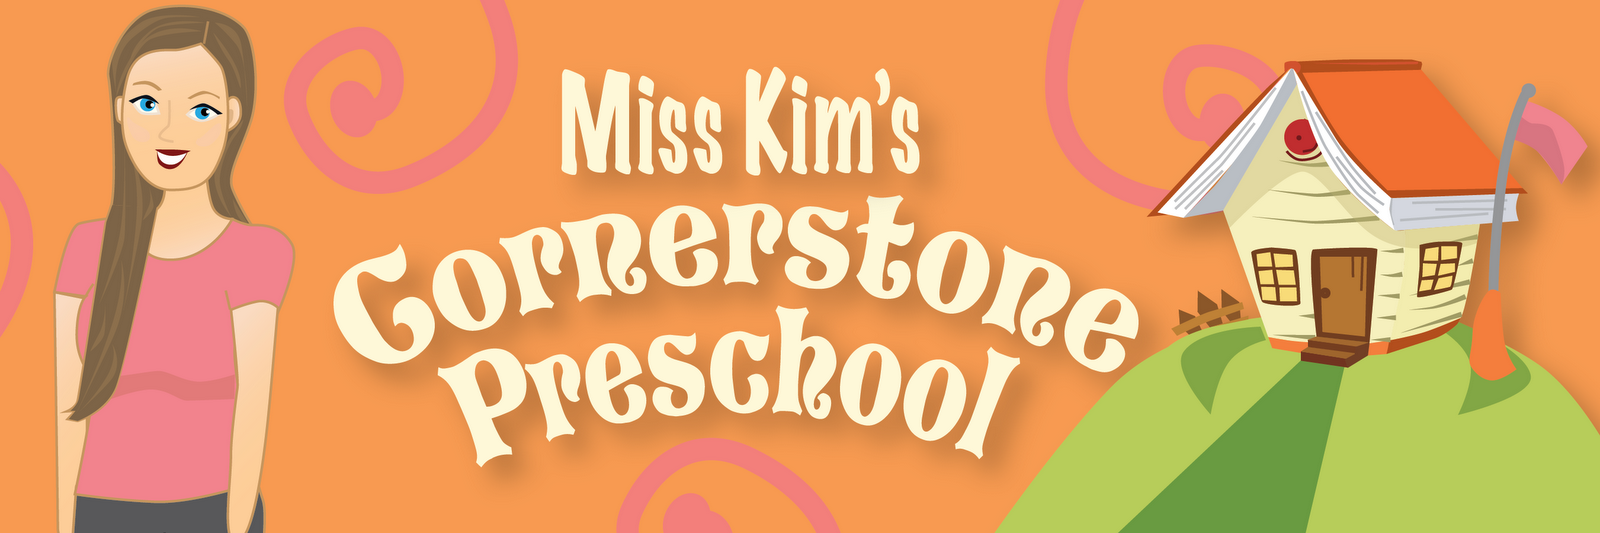 Cornerstone Preschool